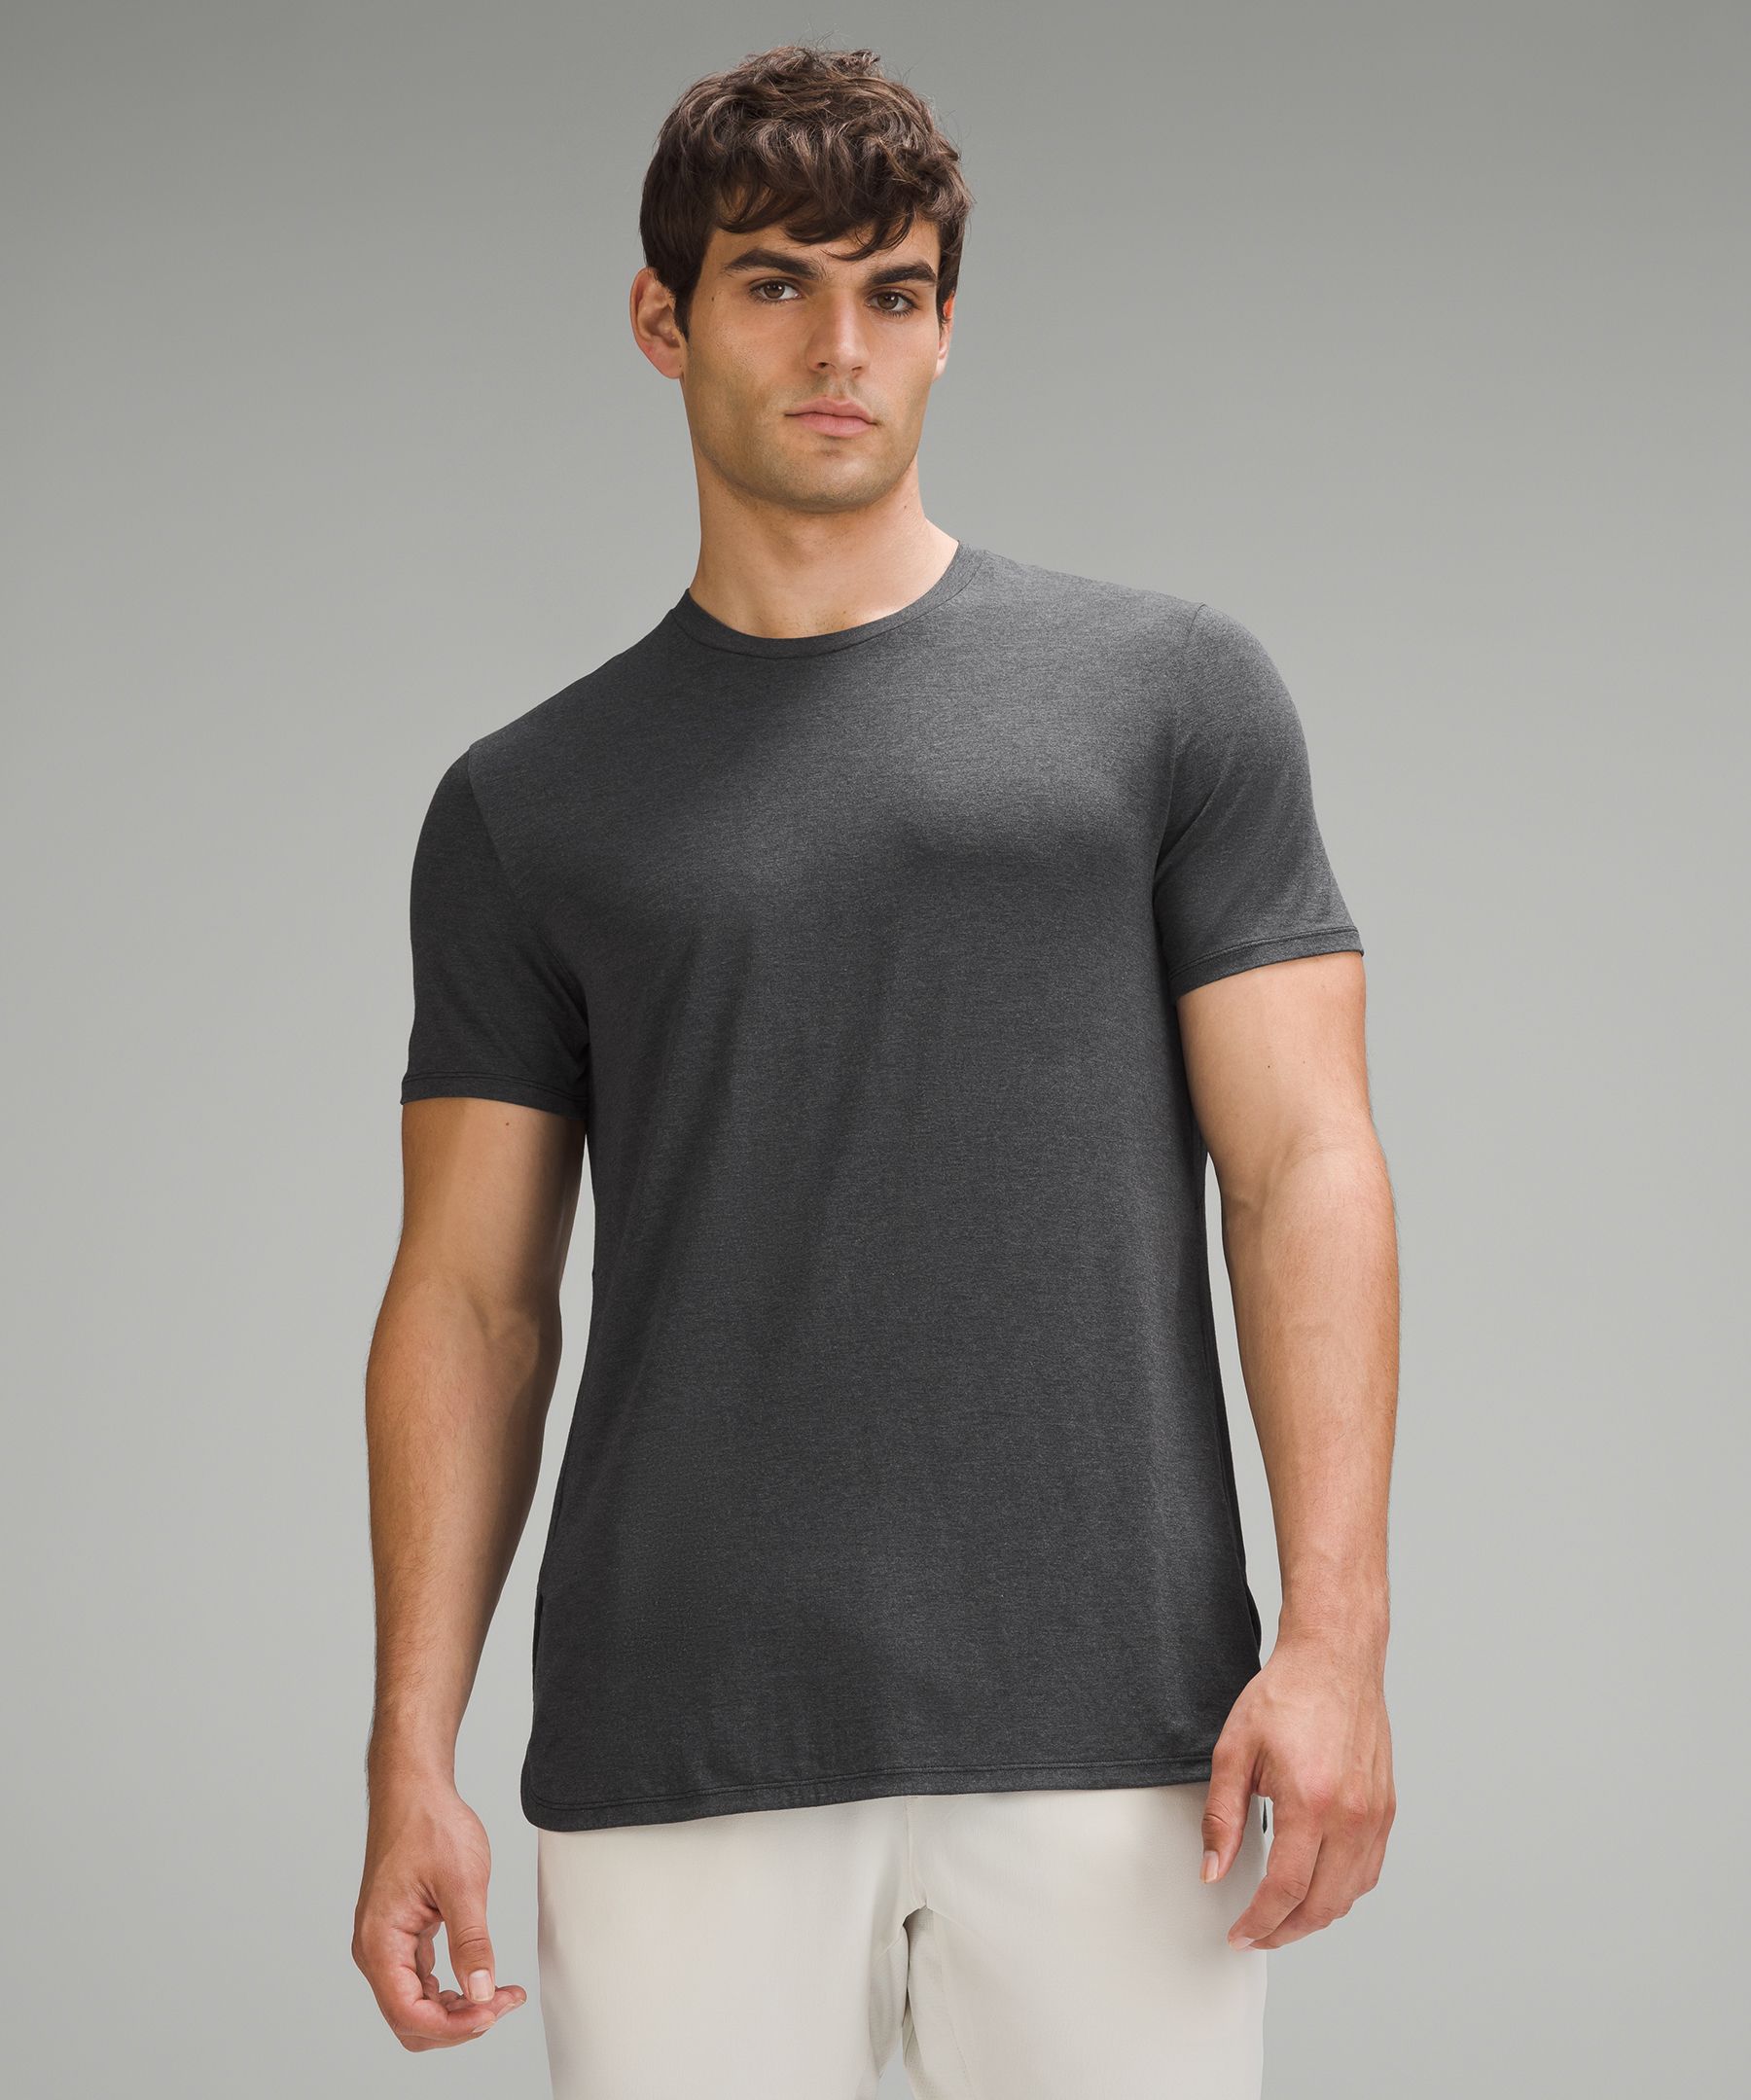 Lululemon Balancer Short Sleeve Shirt In Black